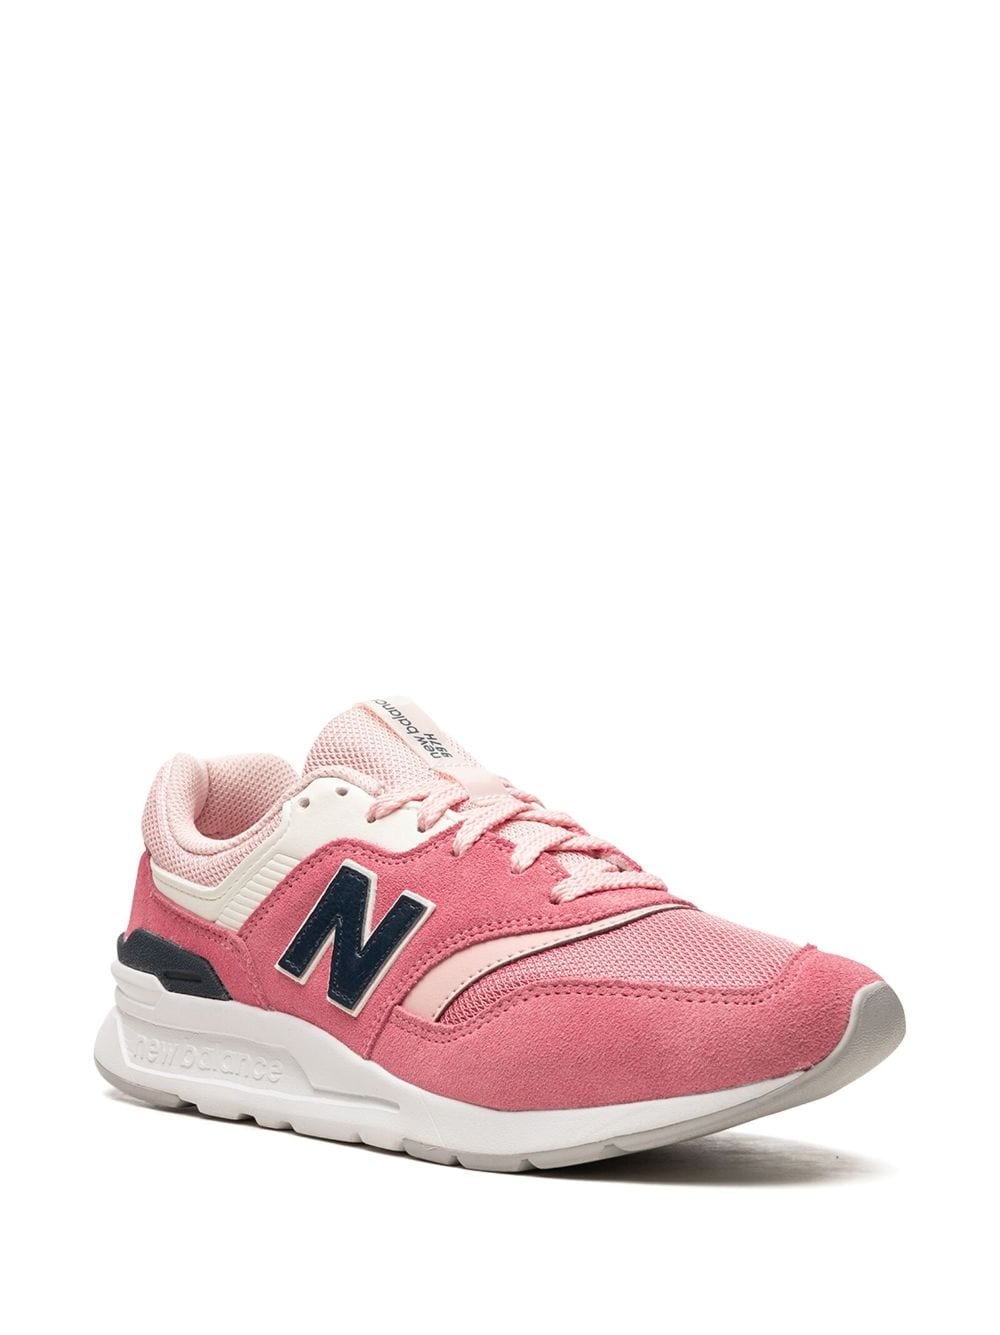 997 "Pink Haze/White" sneakers - 2